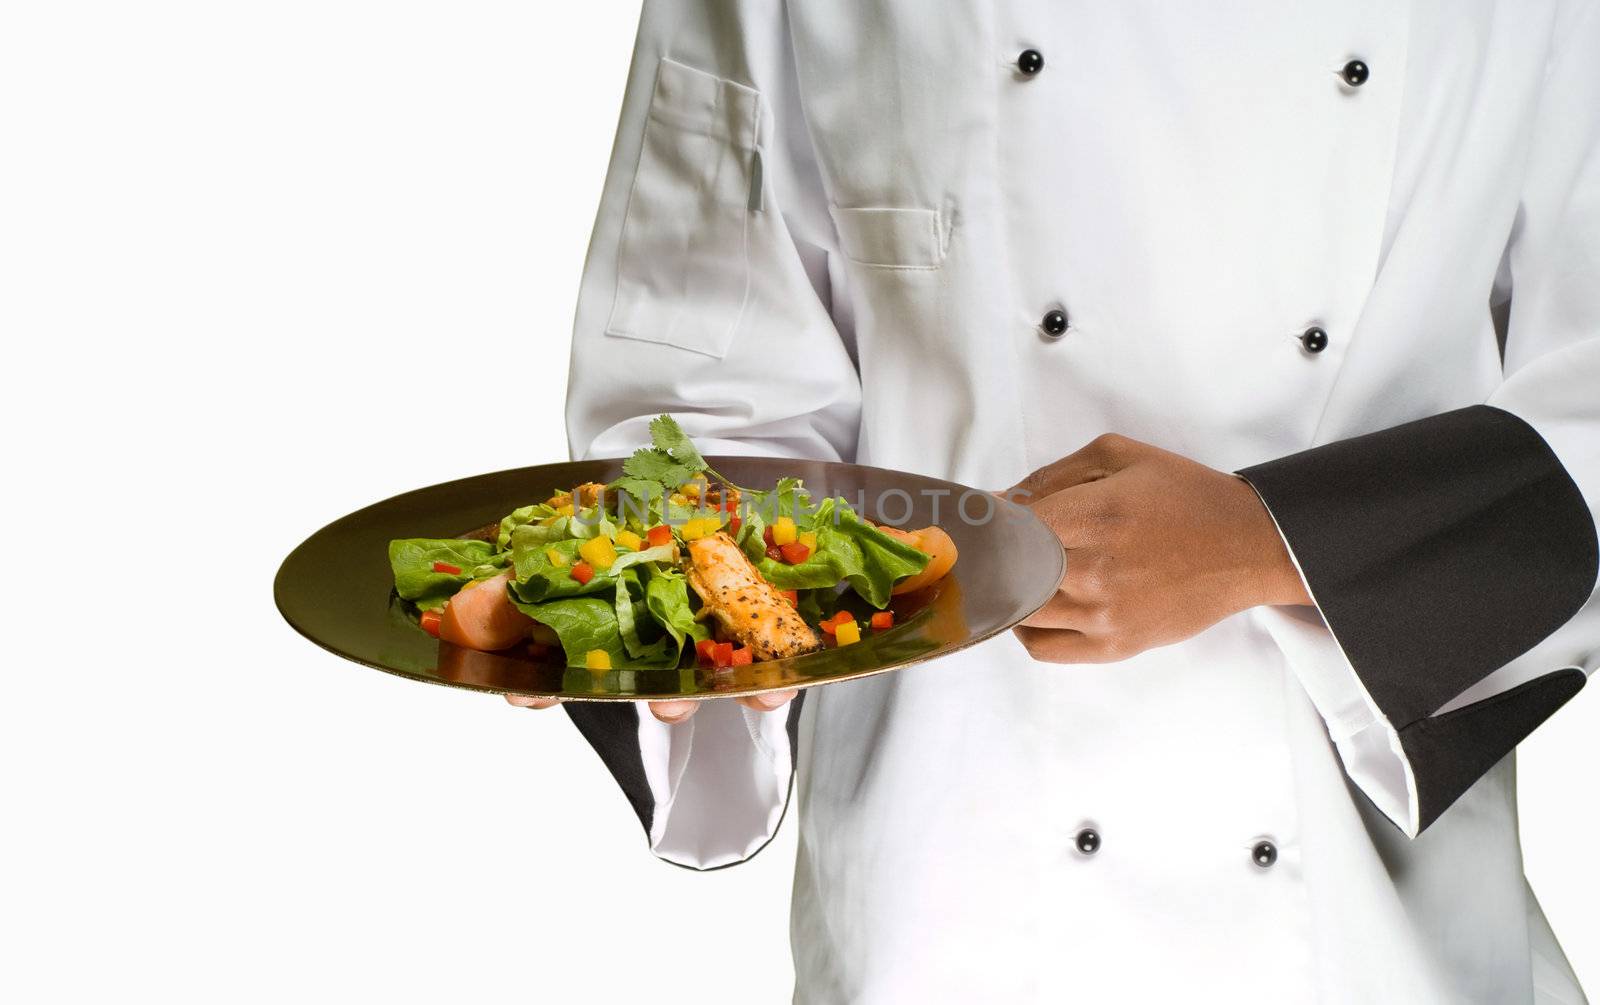 African or American chef presenting heathy food chicken salad